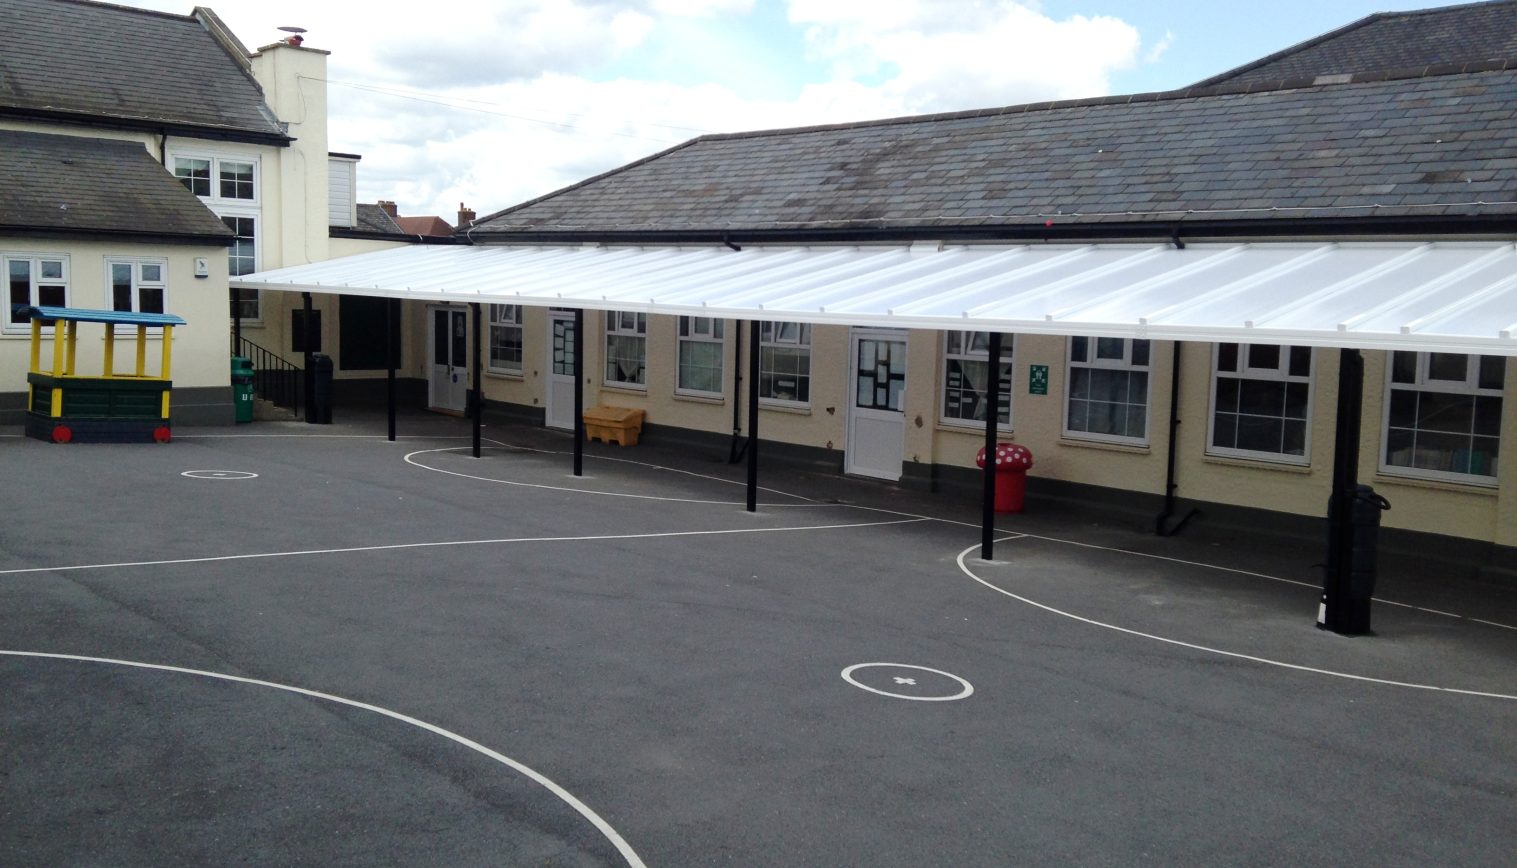 The Good Shepherd Primary School – 2nd Wall Mounted Canopy